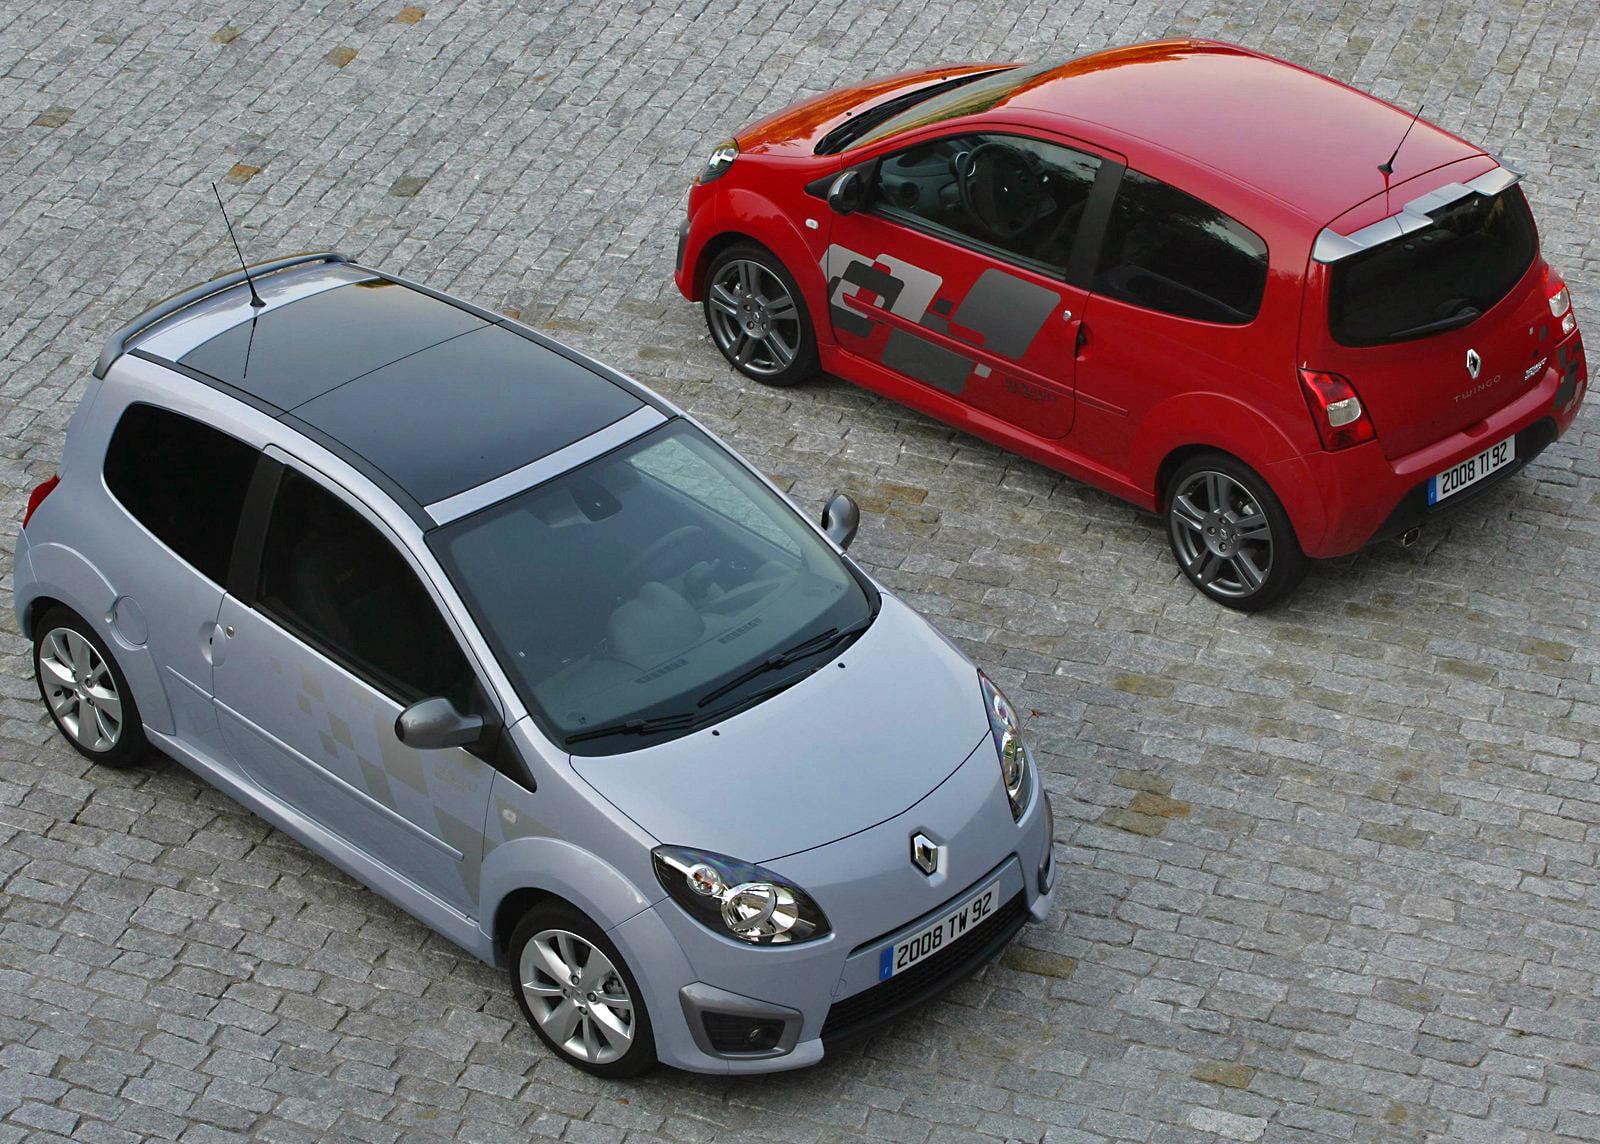 Renault Twingo RS, renault, car, motor vehicle, mode of transportation